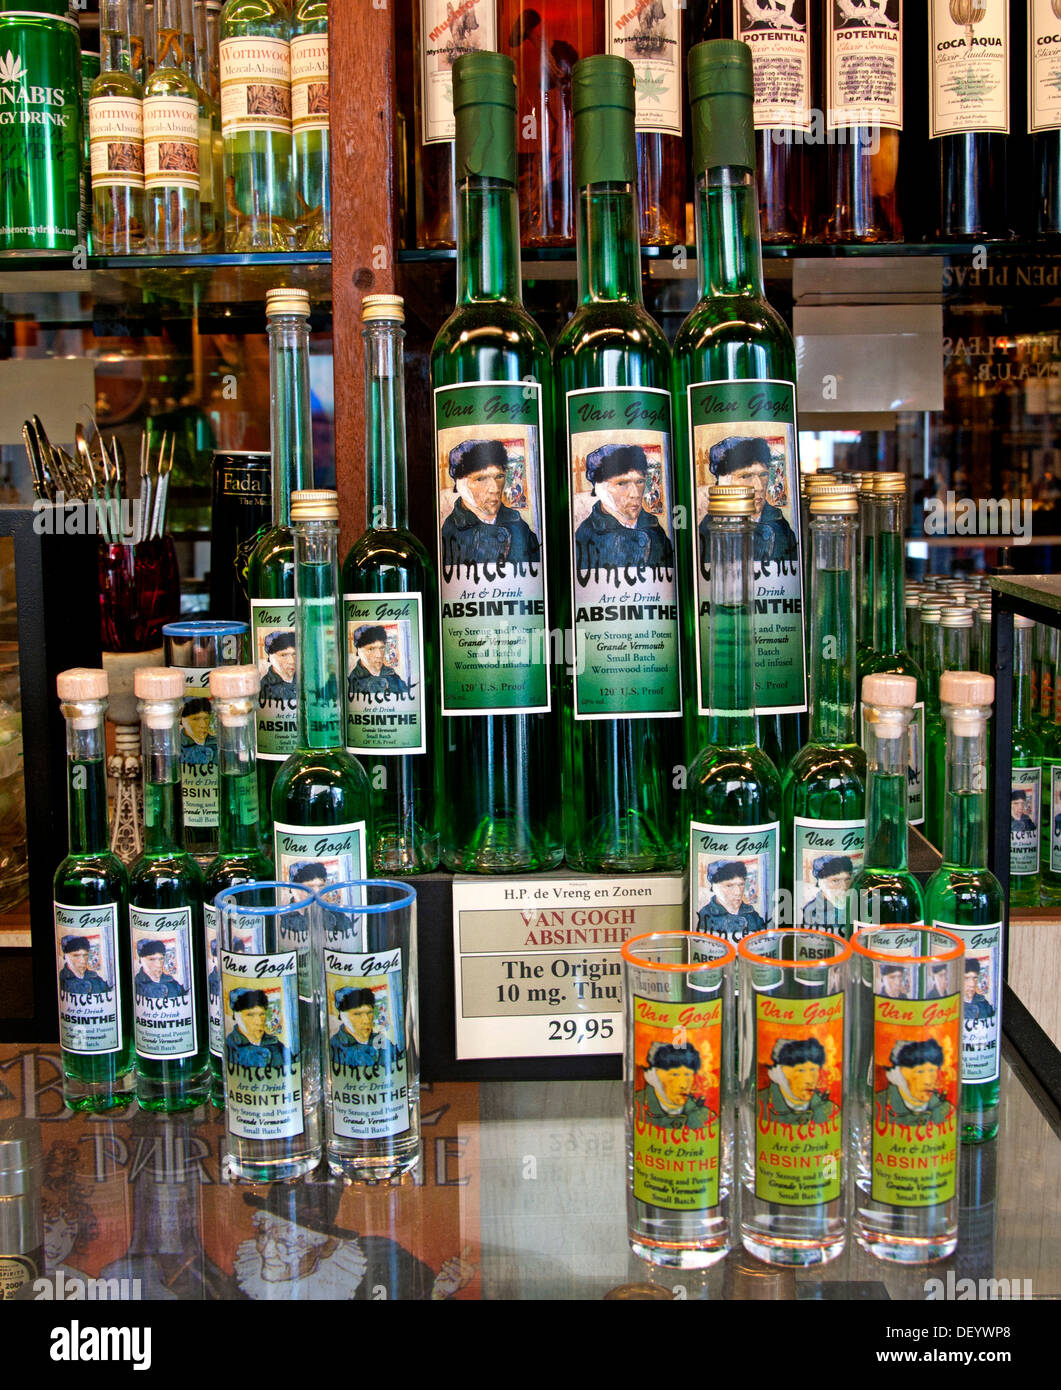 Vincent van Gogh Absinthe Liquor Store msterdam Cafe bar pub Netherlands Stock Photo